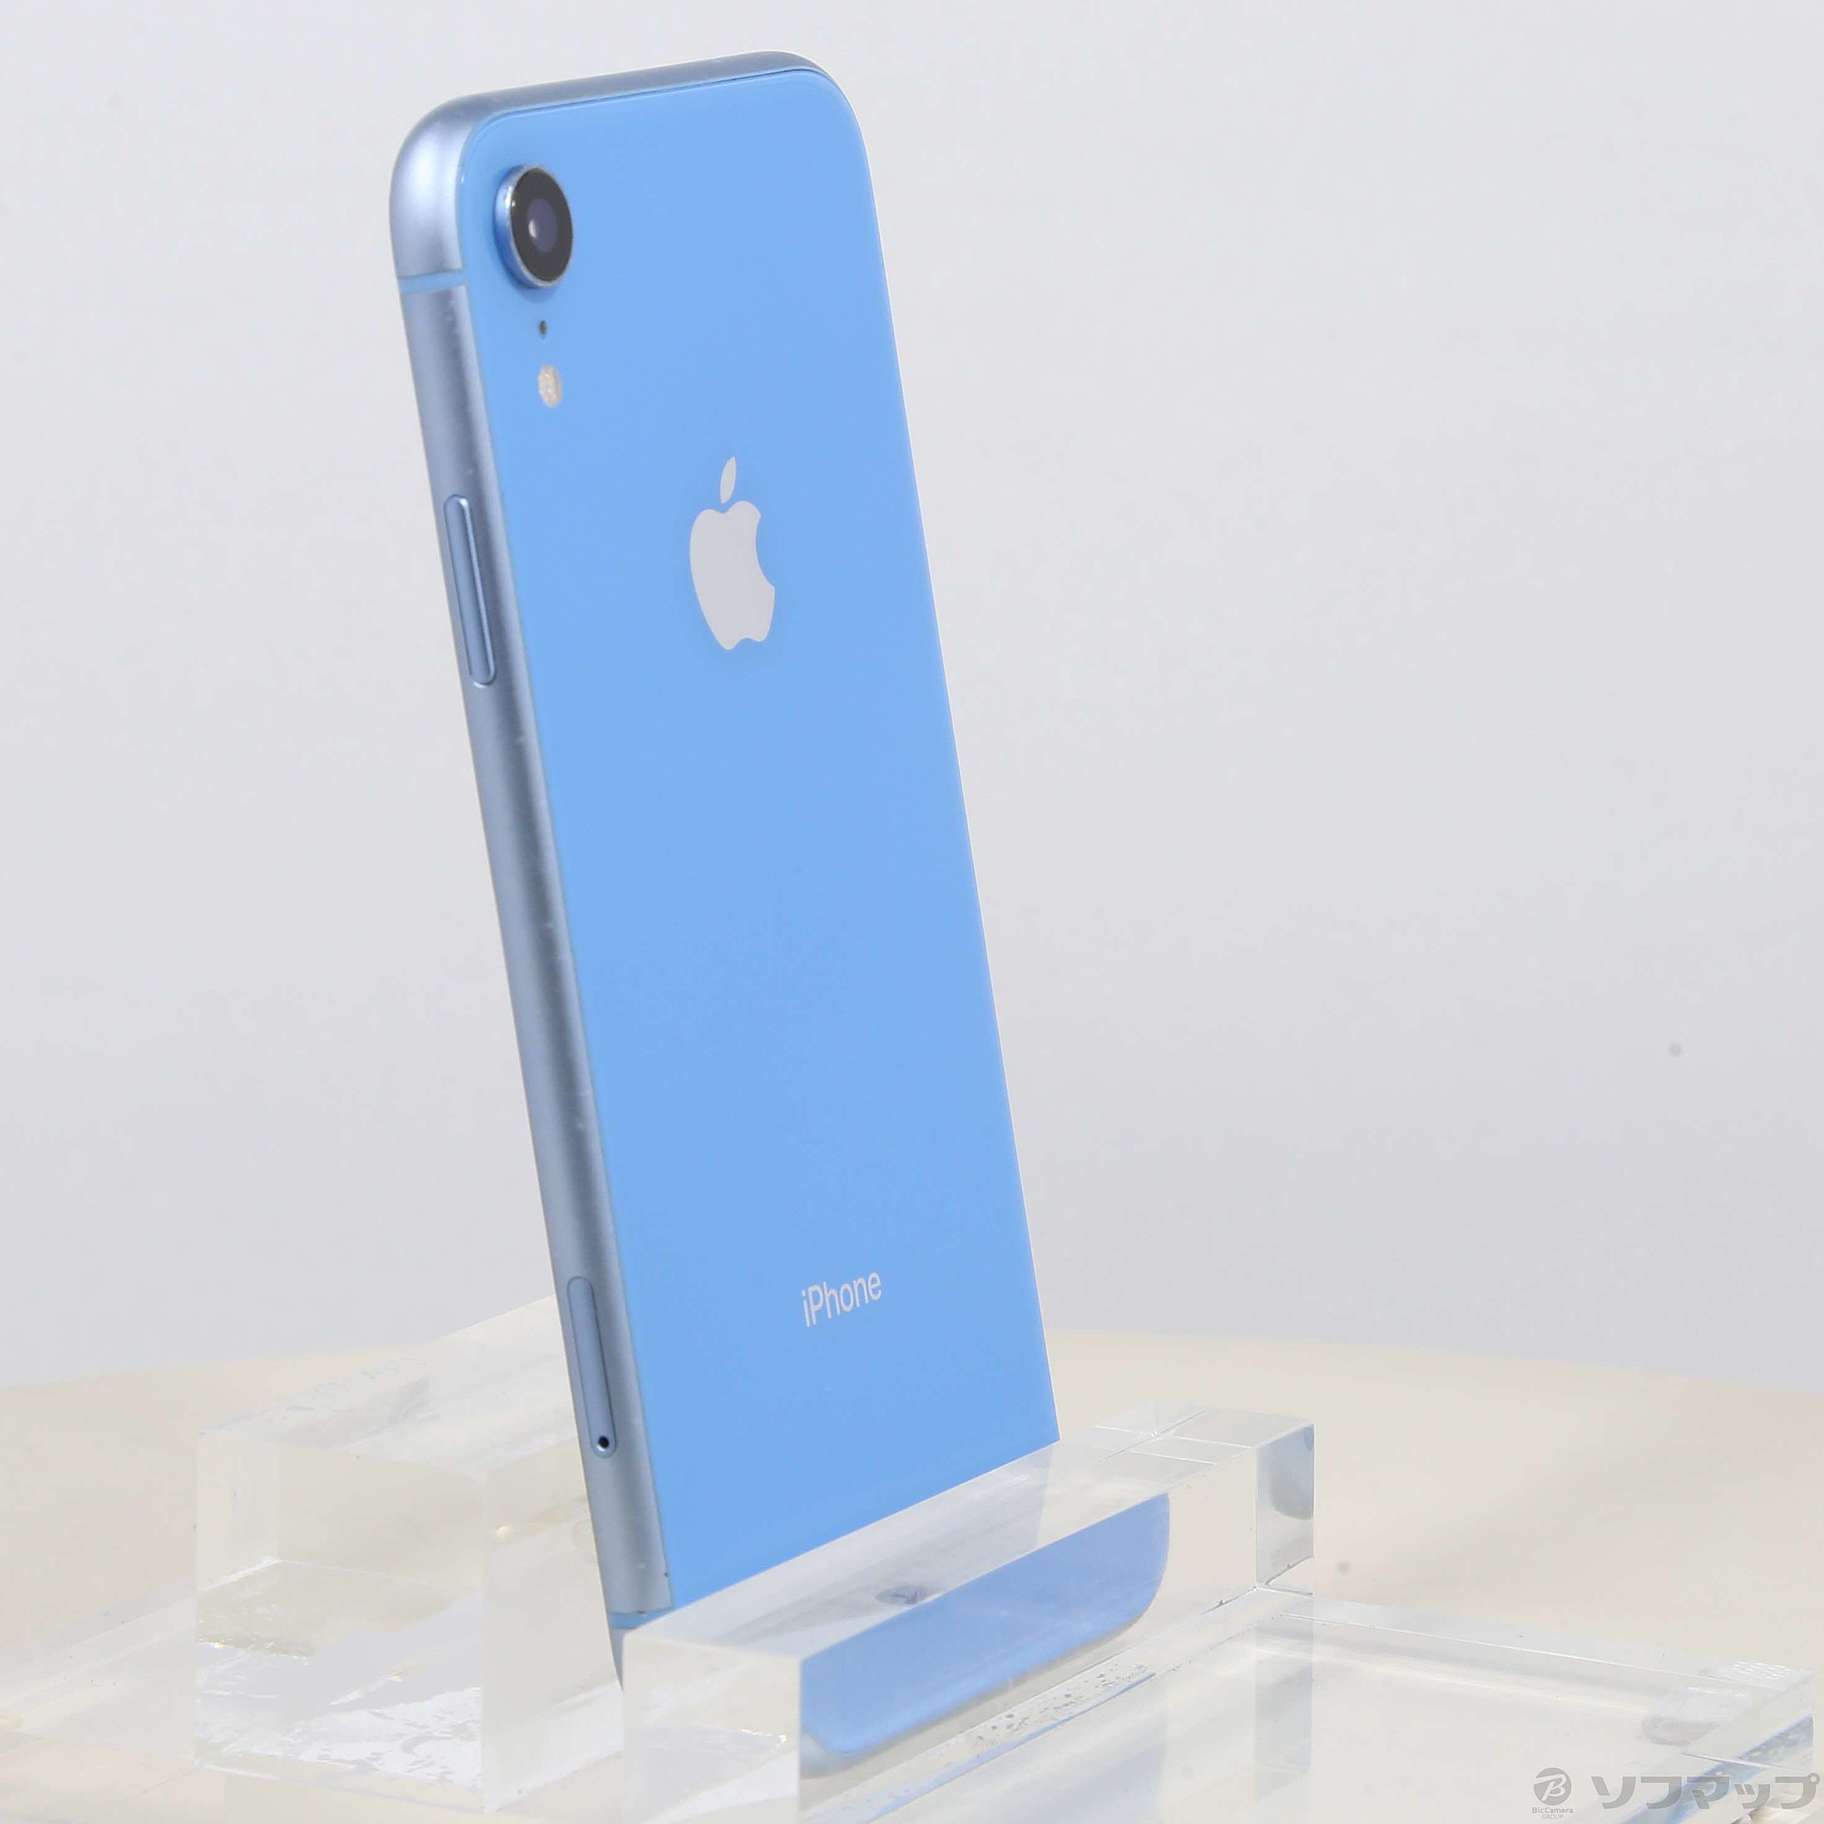 iPhone XR Blue 256 GB Softbank修理歴はありません - www ...